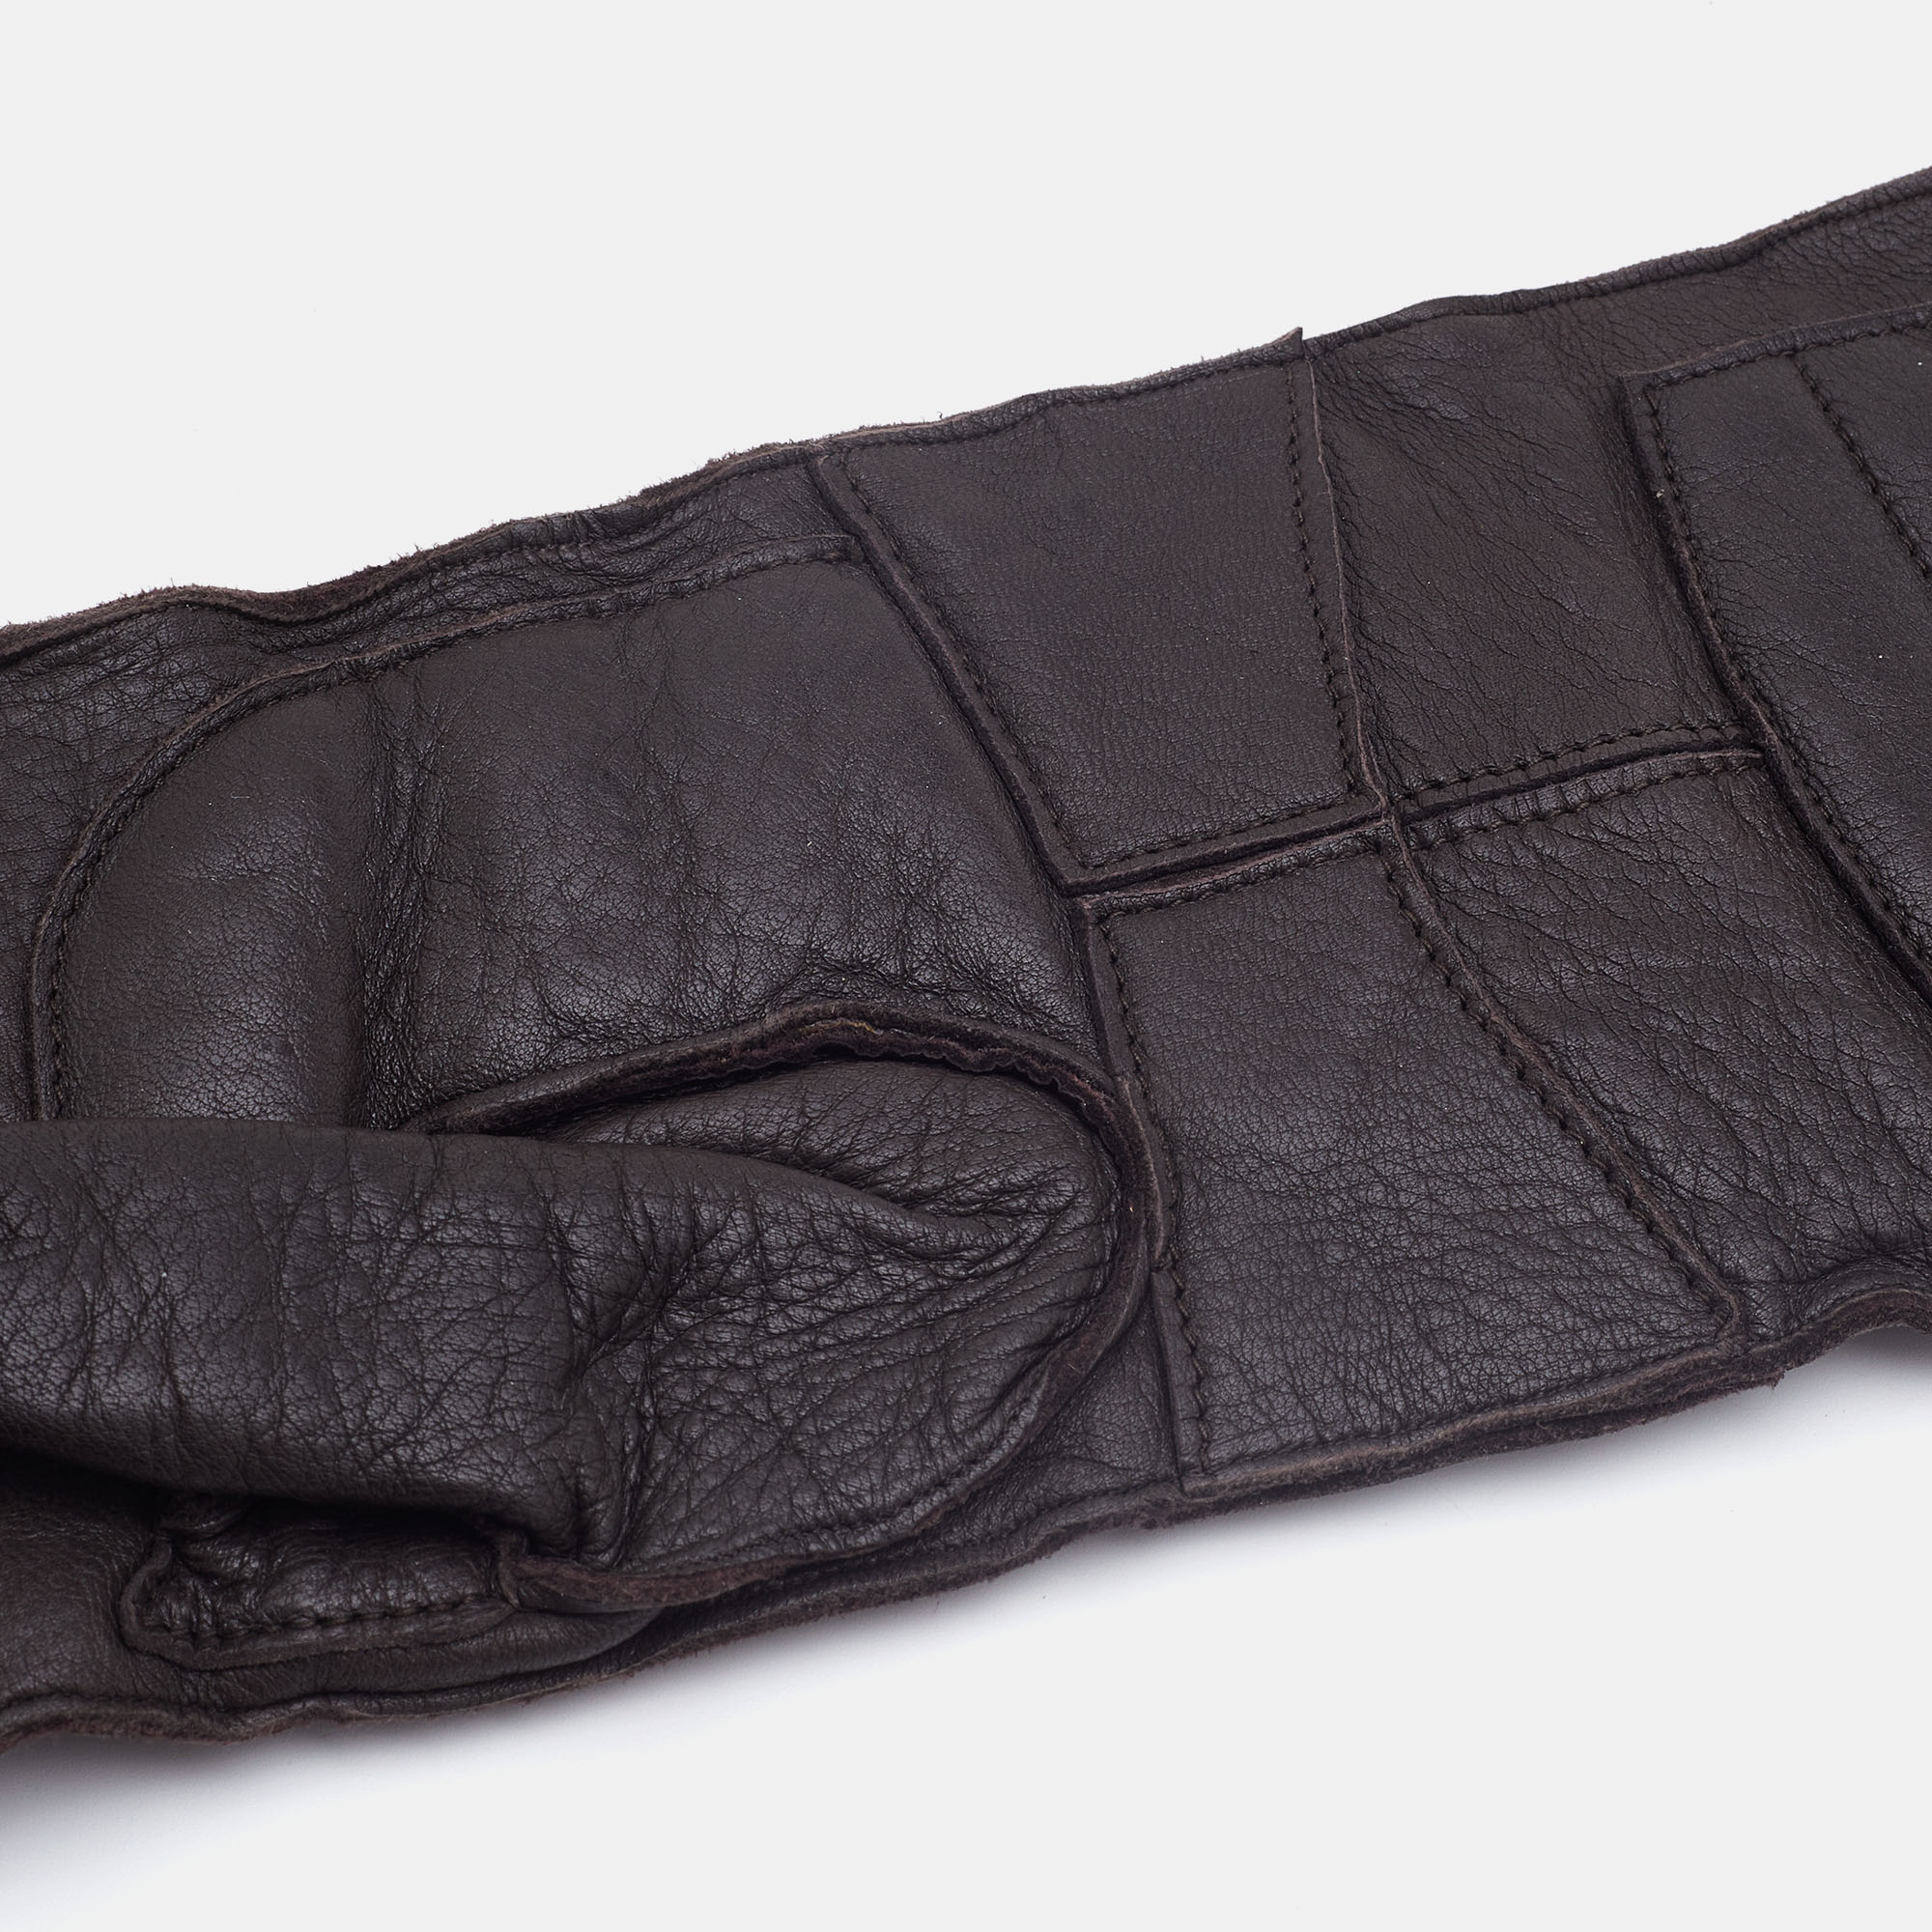 Marni Dark Brown Leather Long Gloves